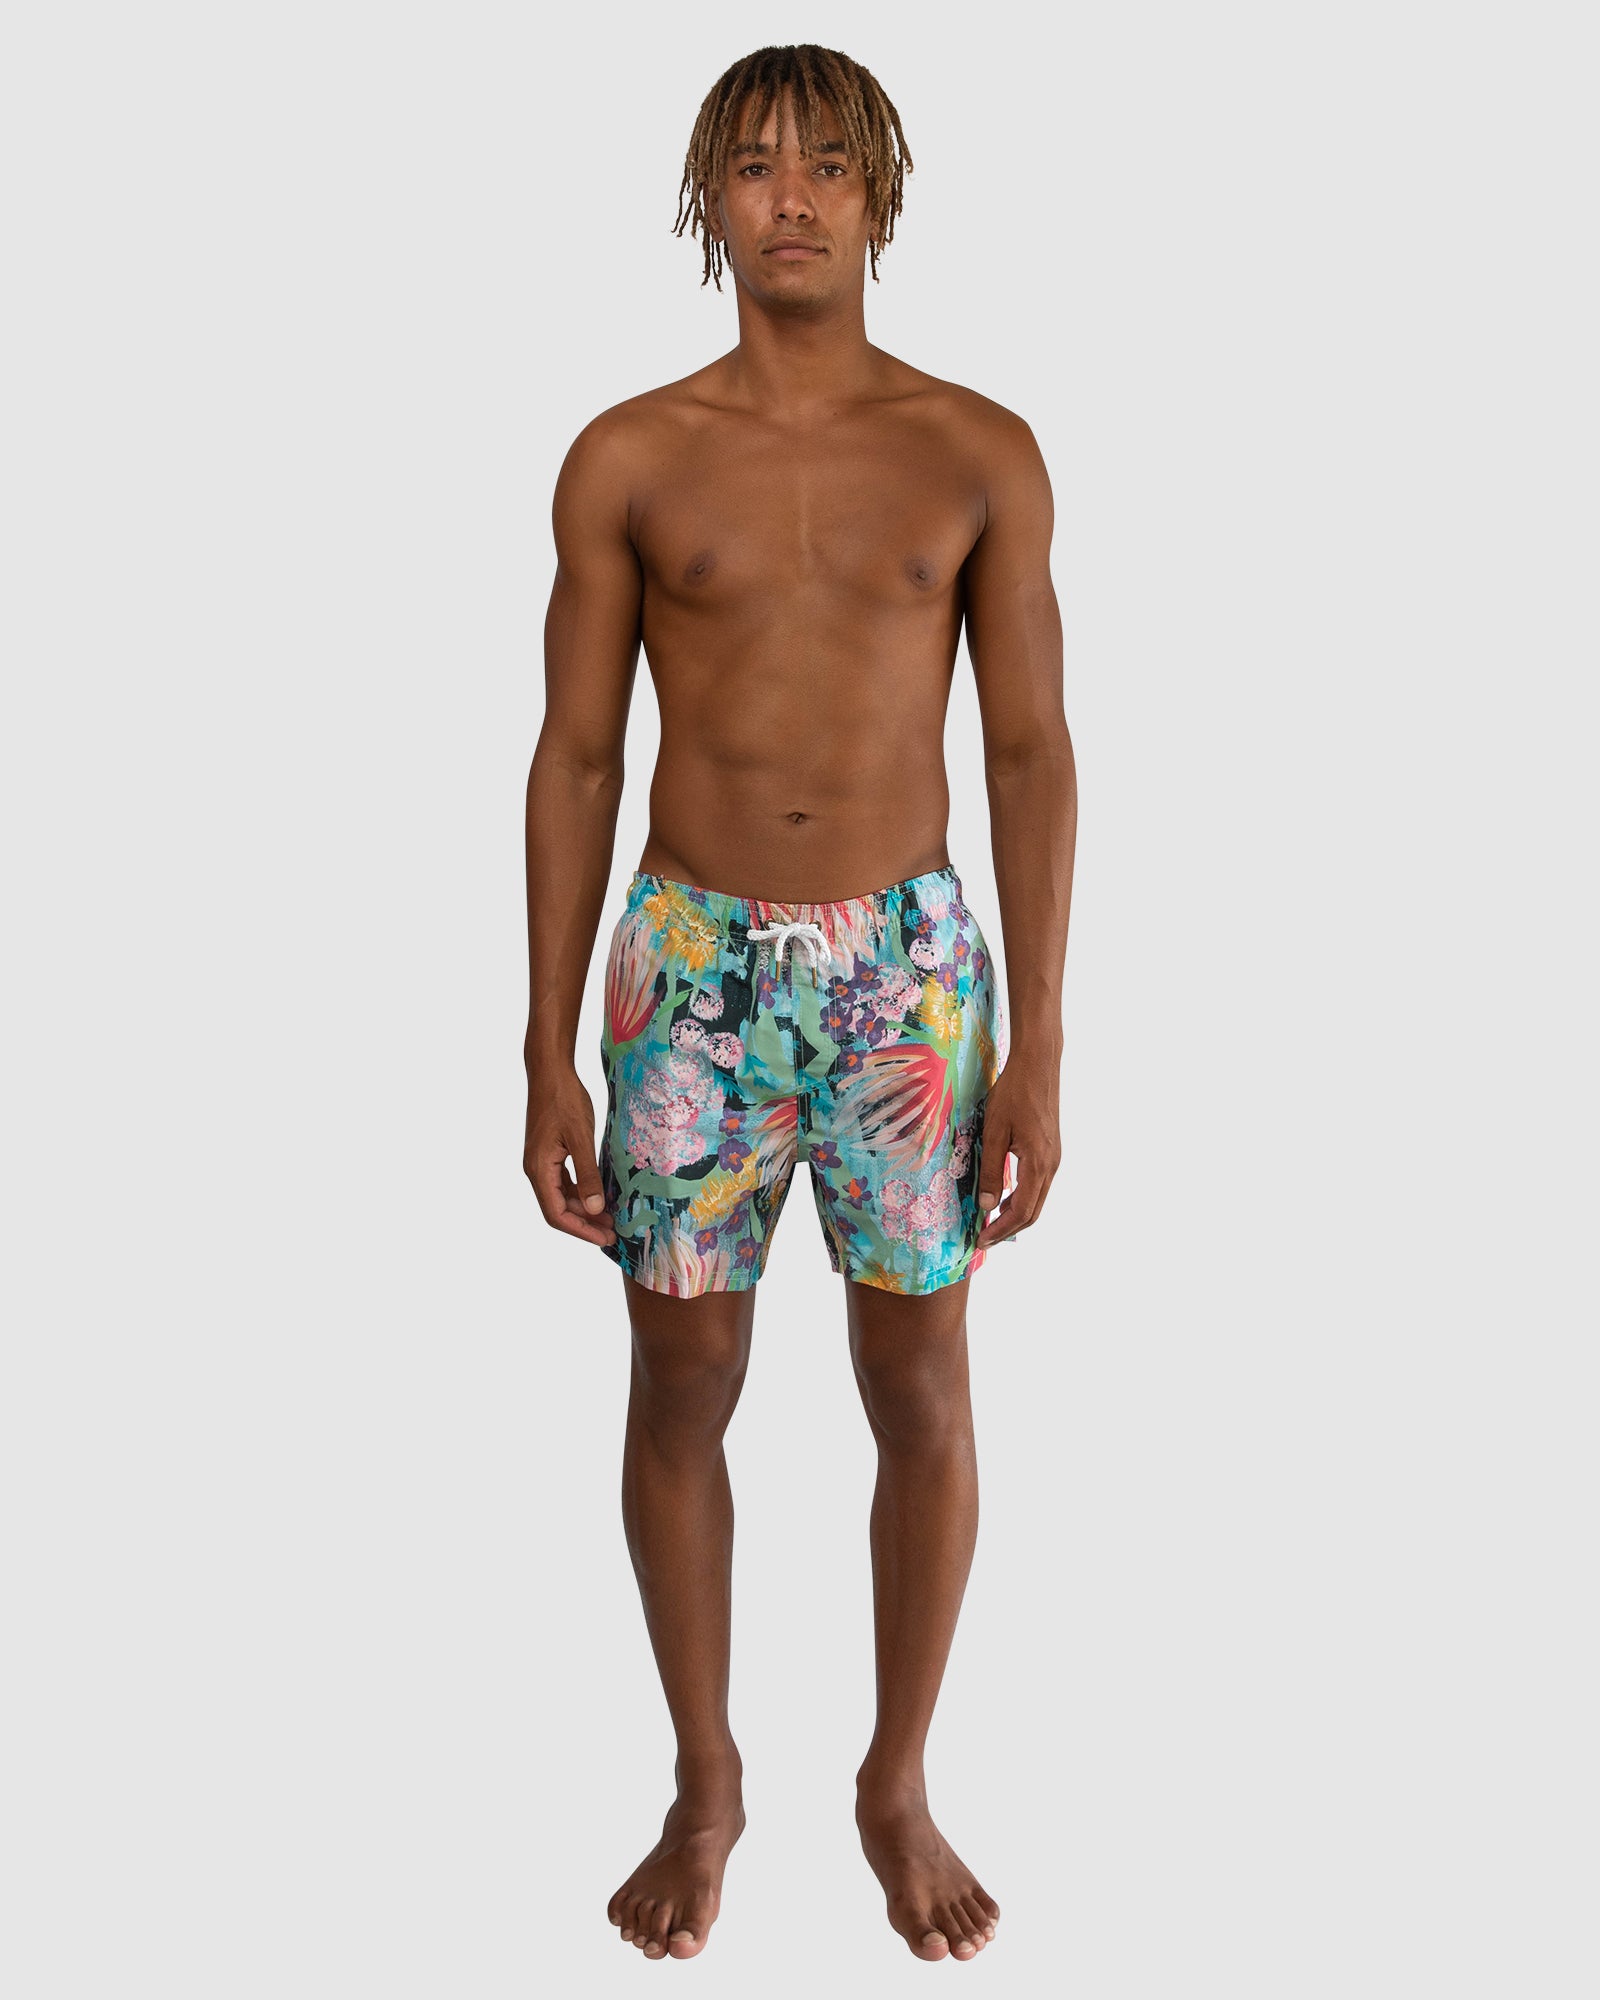 These Days Swim Shorts | ortc Clothing Co - Tiff Manuell